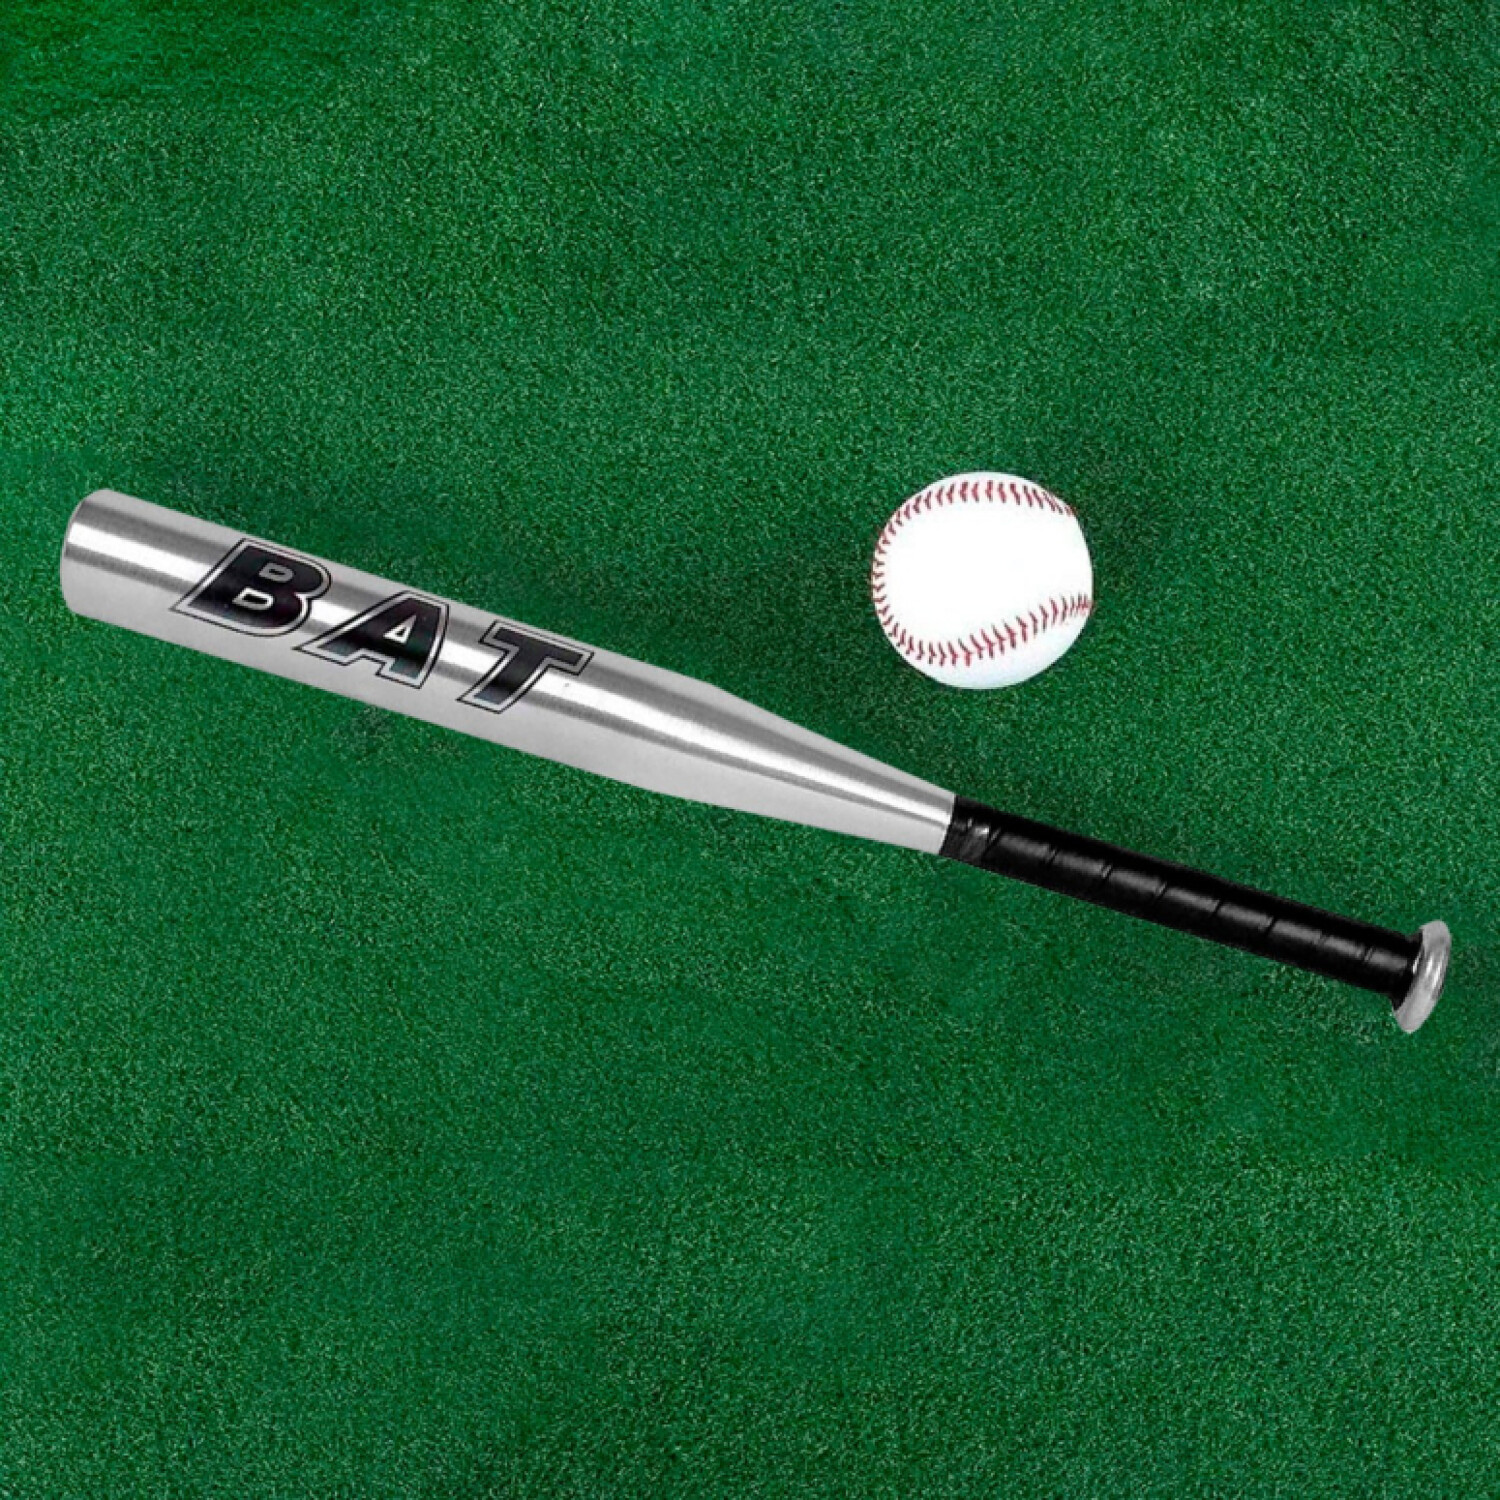 Gas Pimienta + Bate Beisbol Baseball Palo Aluminio Defensa